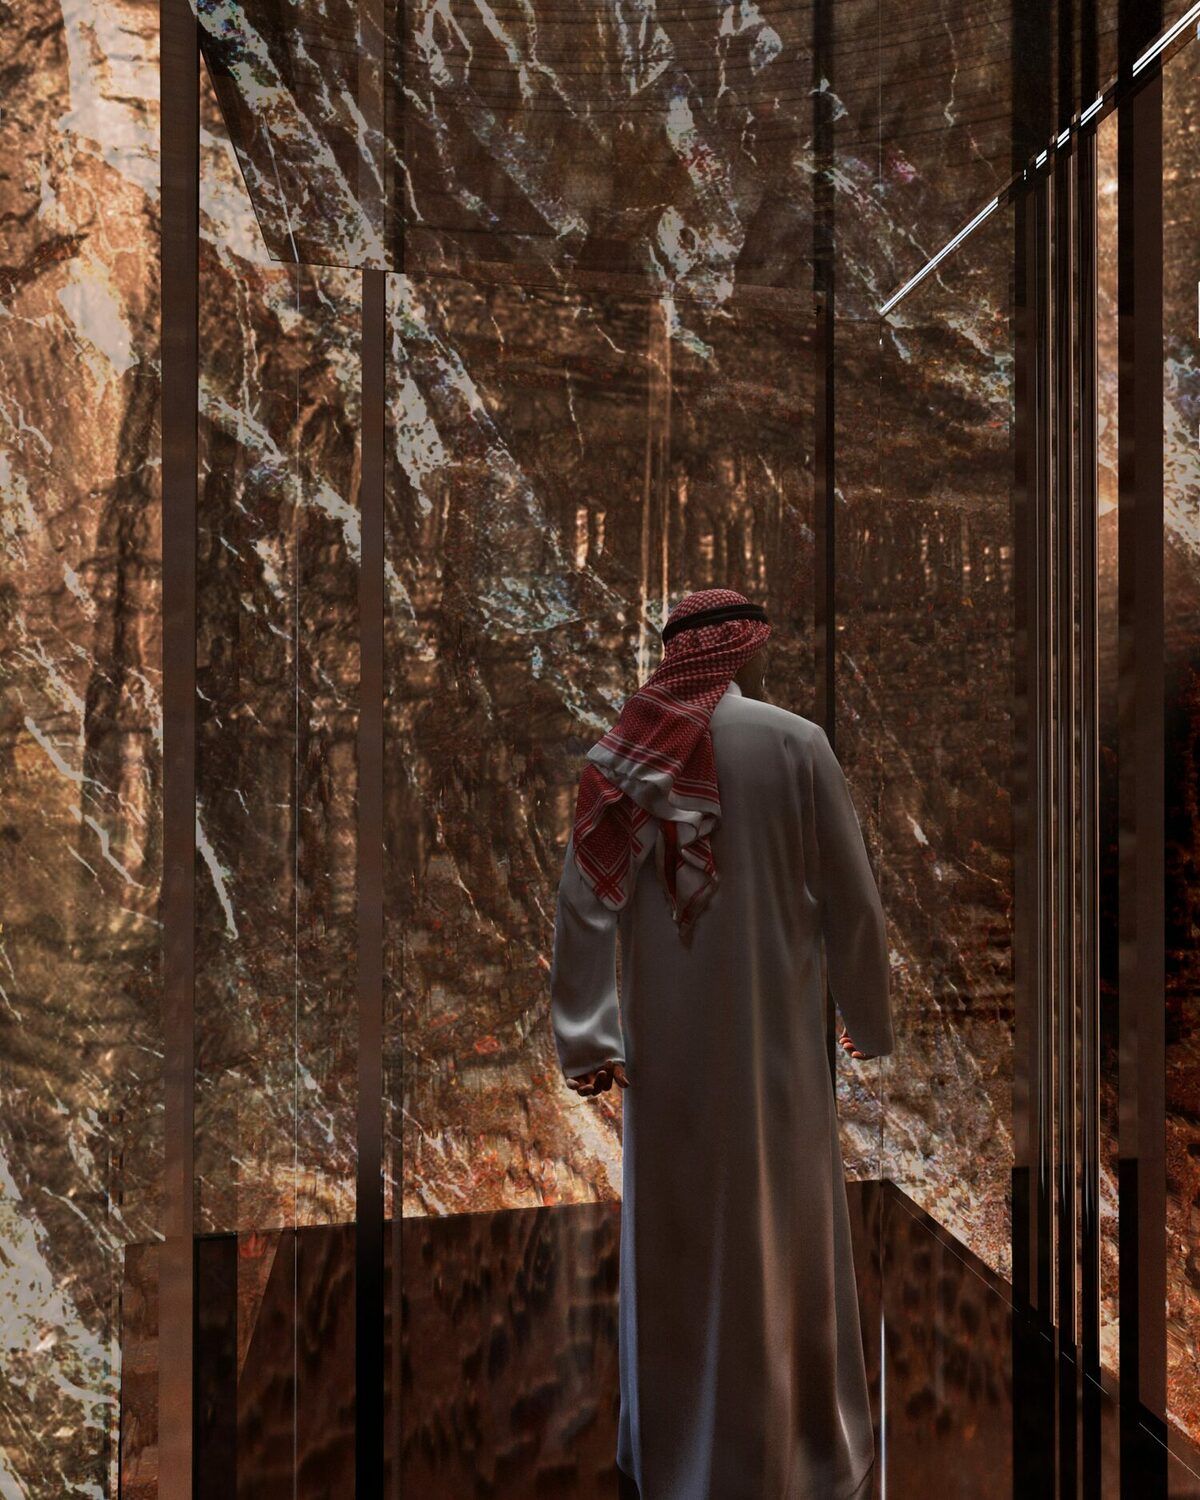 jean nouvel resort saudi arabia alula sharaan rock dwellings dezeen 2364 col 4 scaled 2